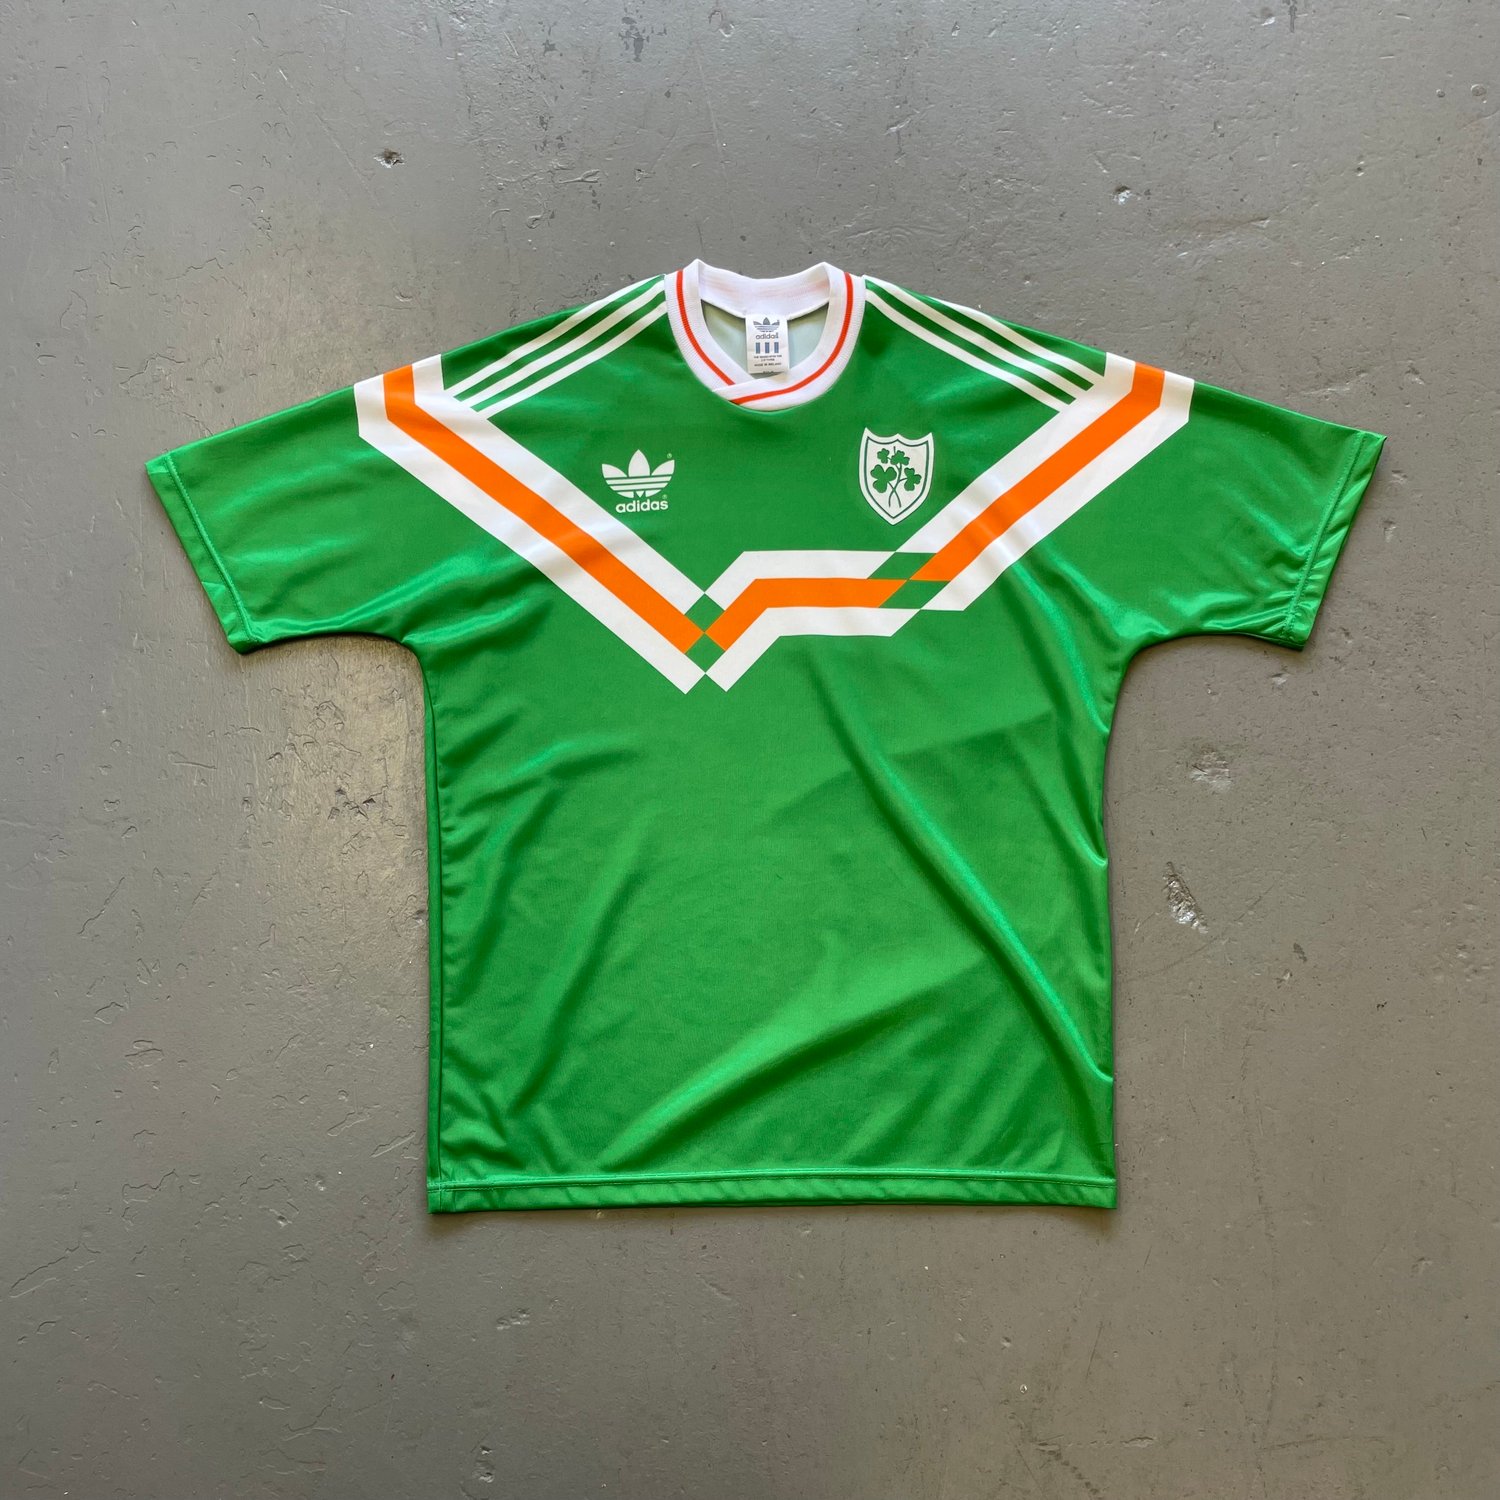 Image of RARE 1989 Adidas Ireland shirt size medium 